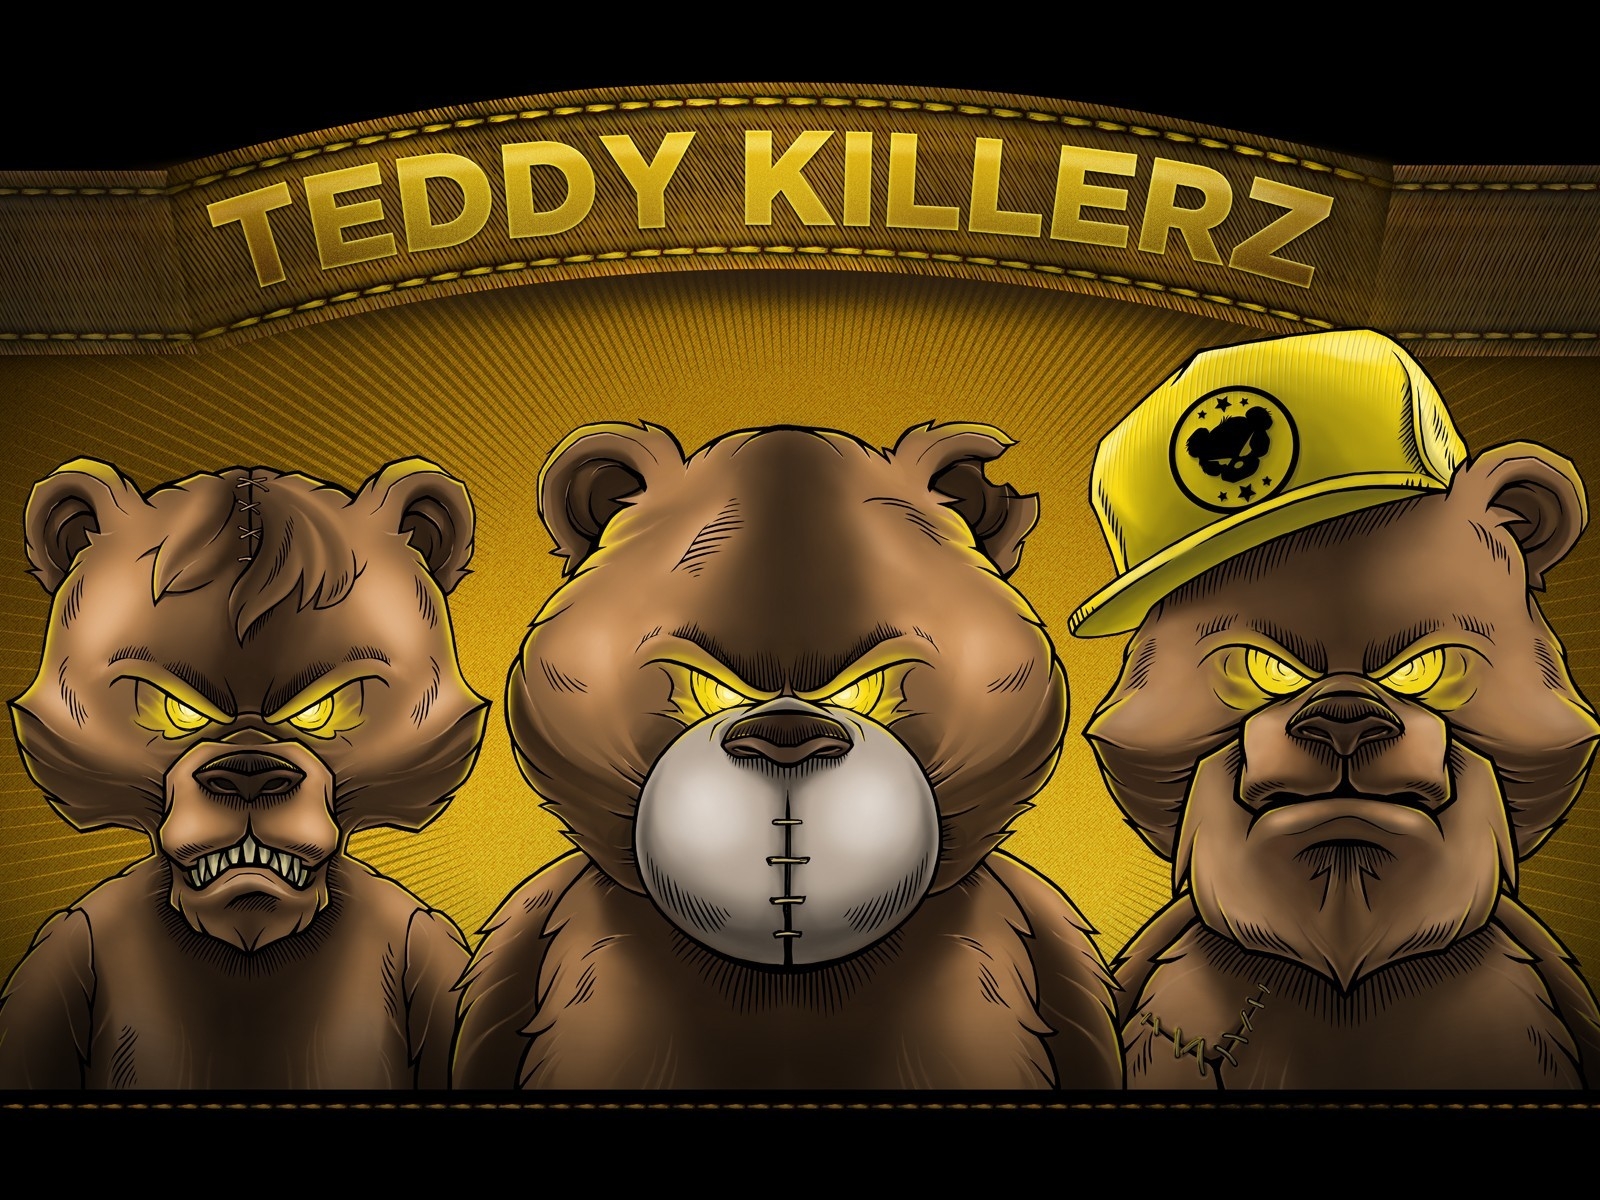 Teddy Killerz Poster for 1600 x 1200 resolution